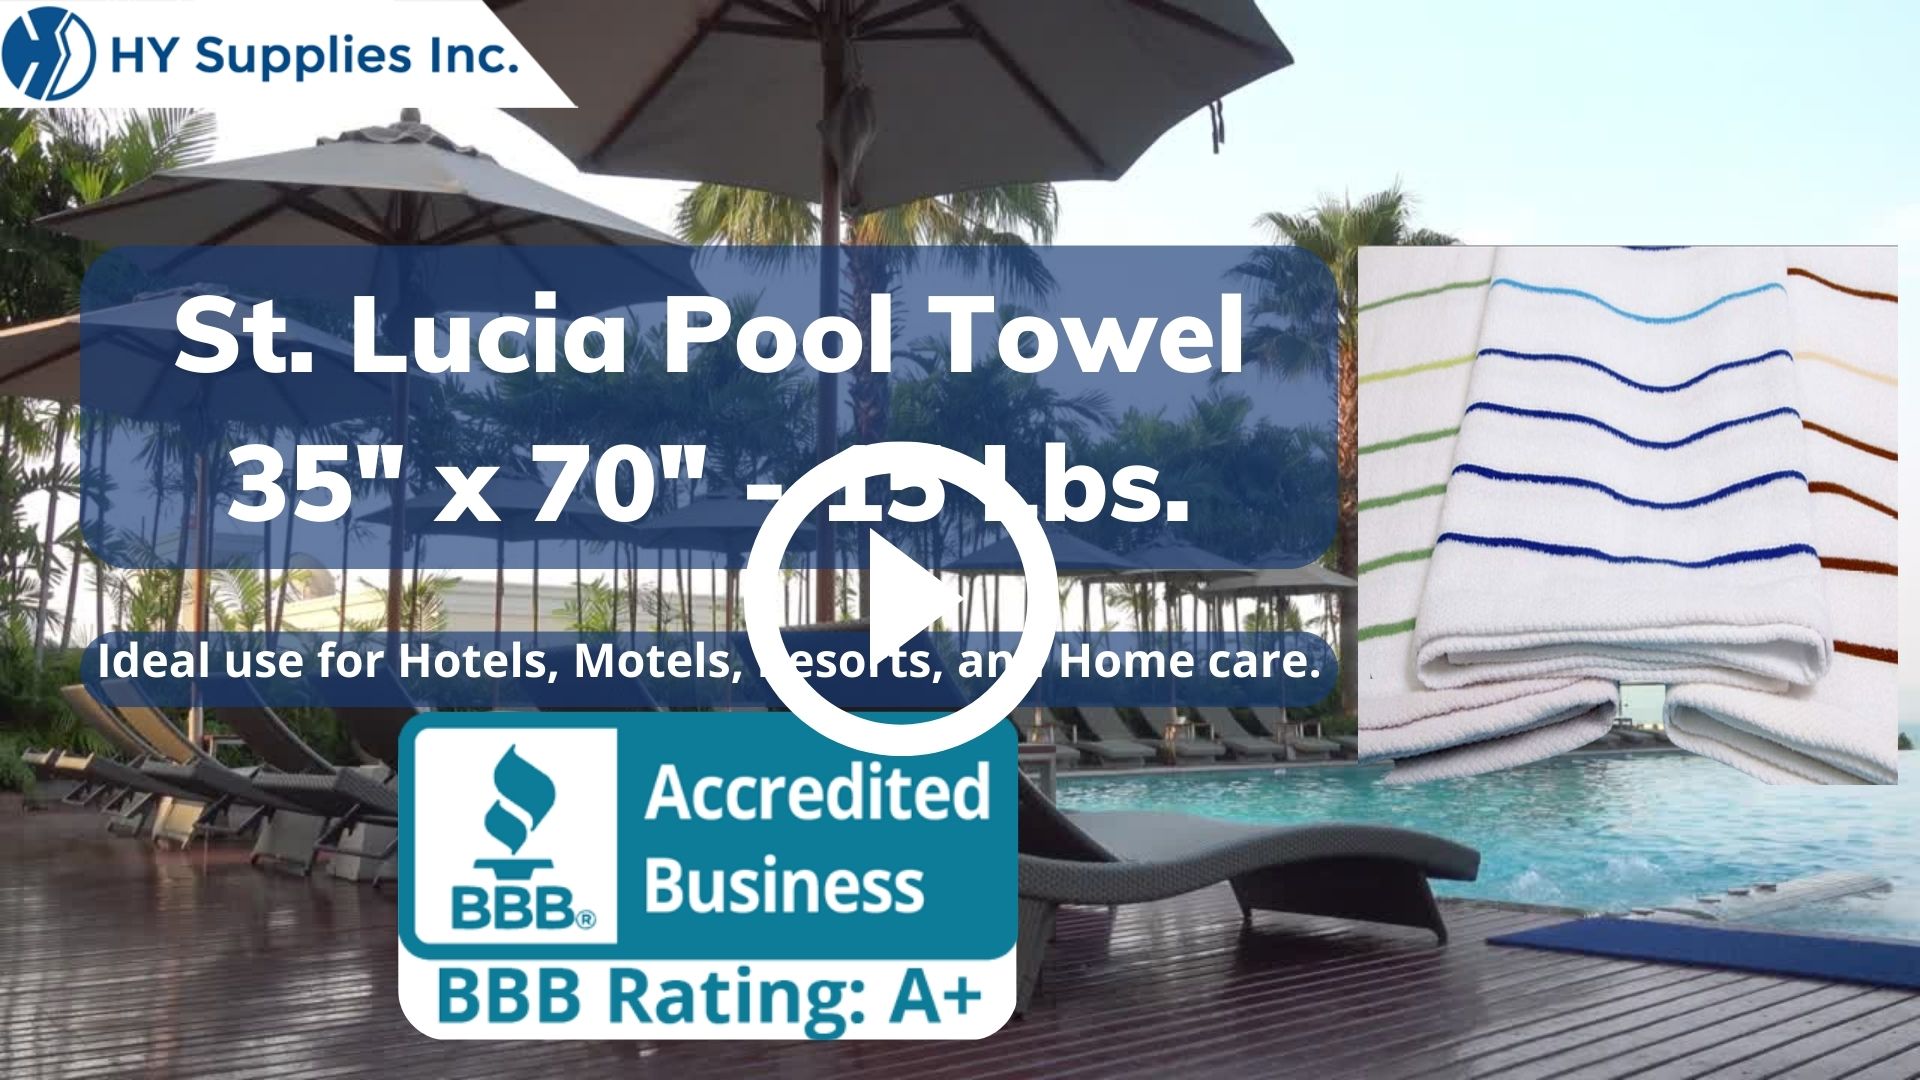 St. Lucia Pool Towel - 35" x 70" - 15 Lbs. 